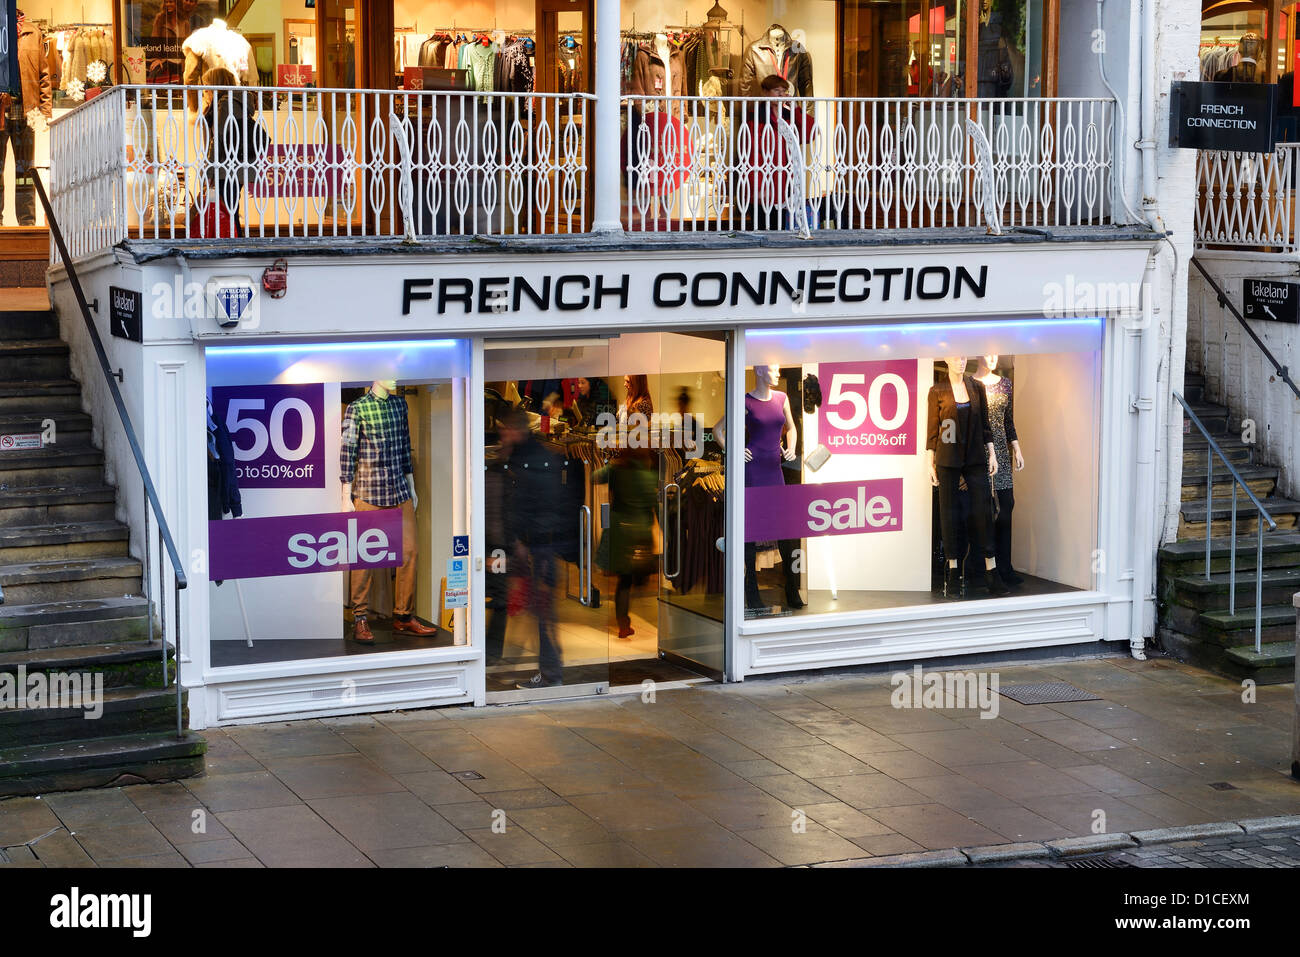 French Connection shop/ Banque D'Images